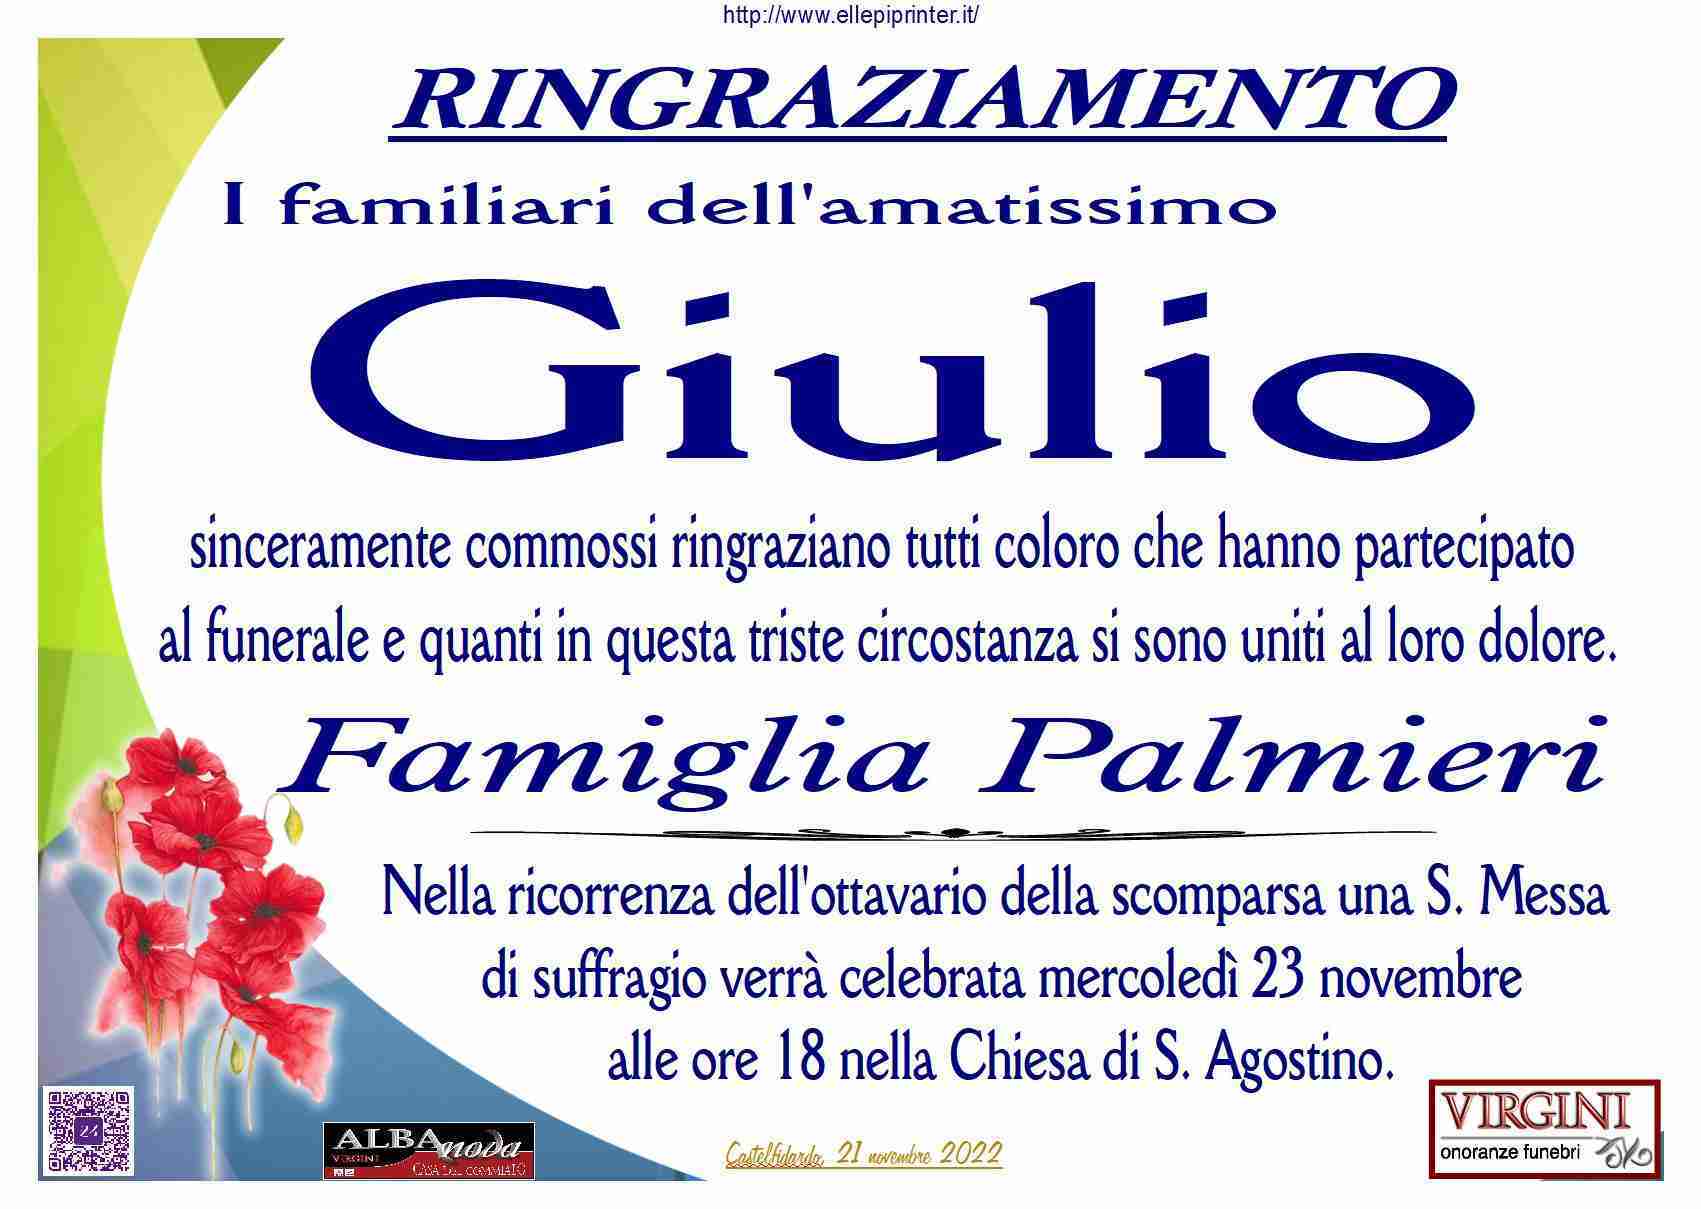 Giulio Palmieri